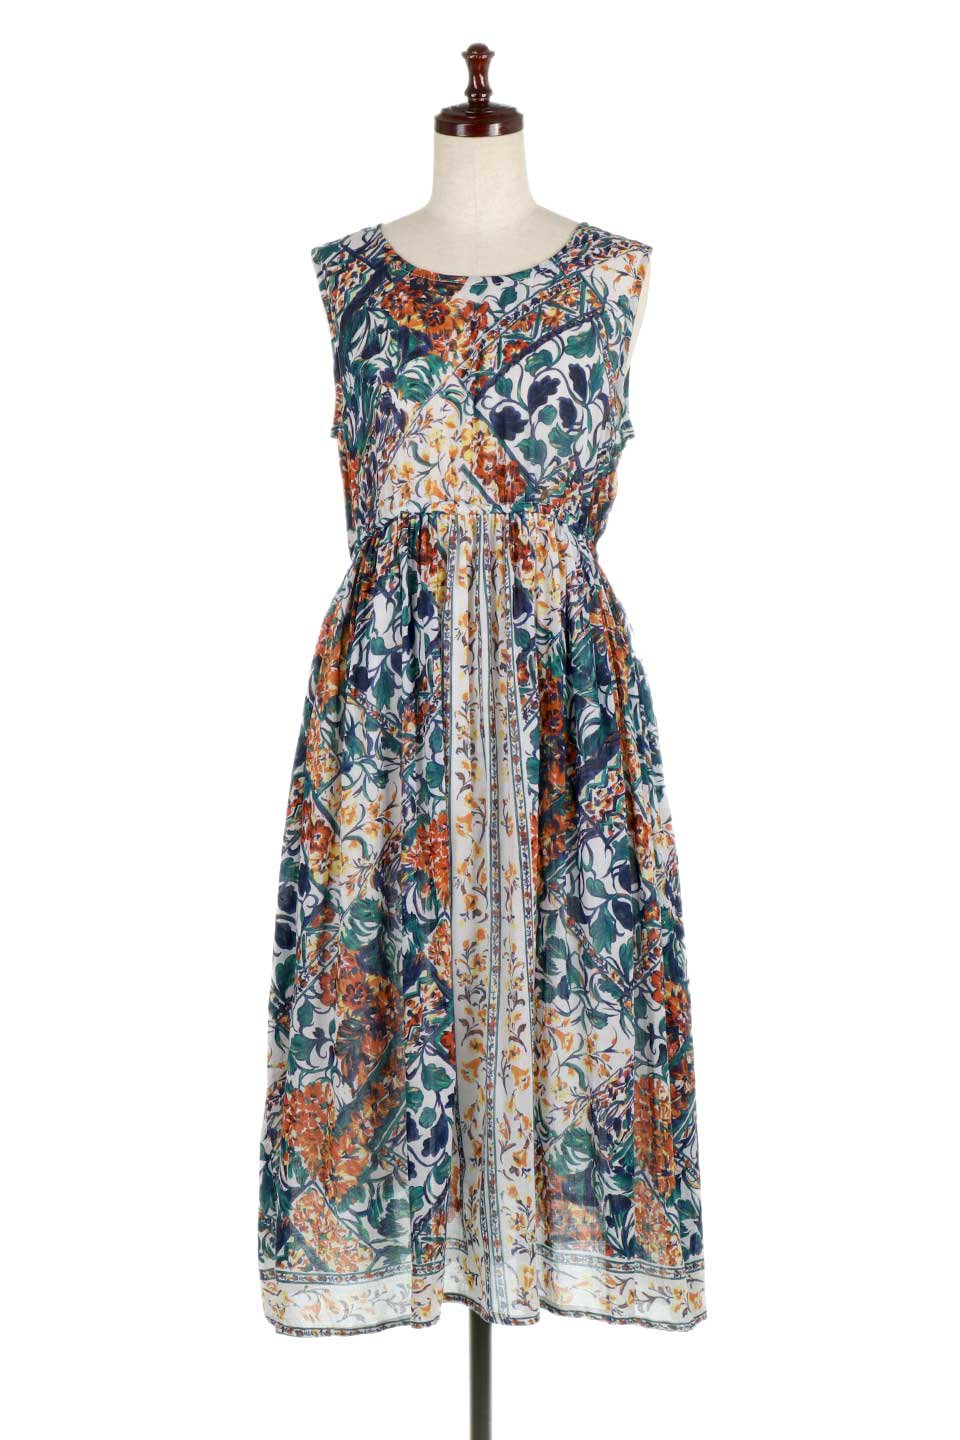 India Cotton Floral Print Dress インドコットン 花柄ワンピース 海外ファッションのインポートセレクトショップbloom